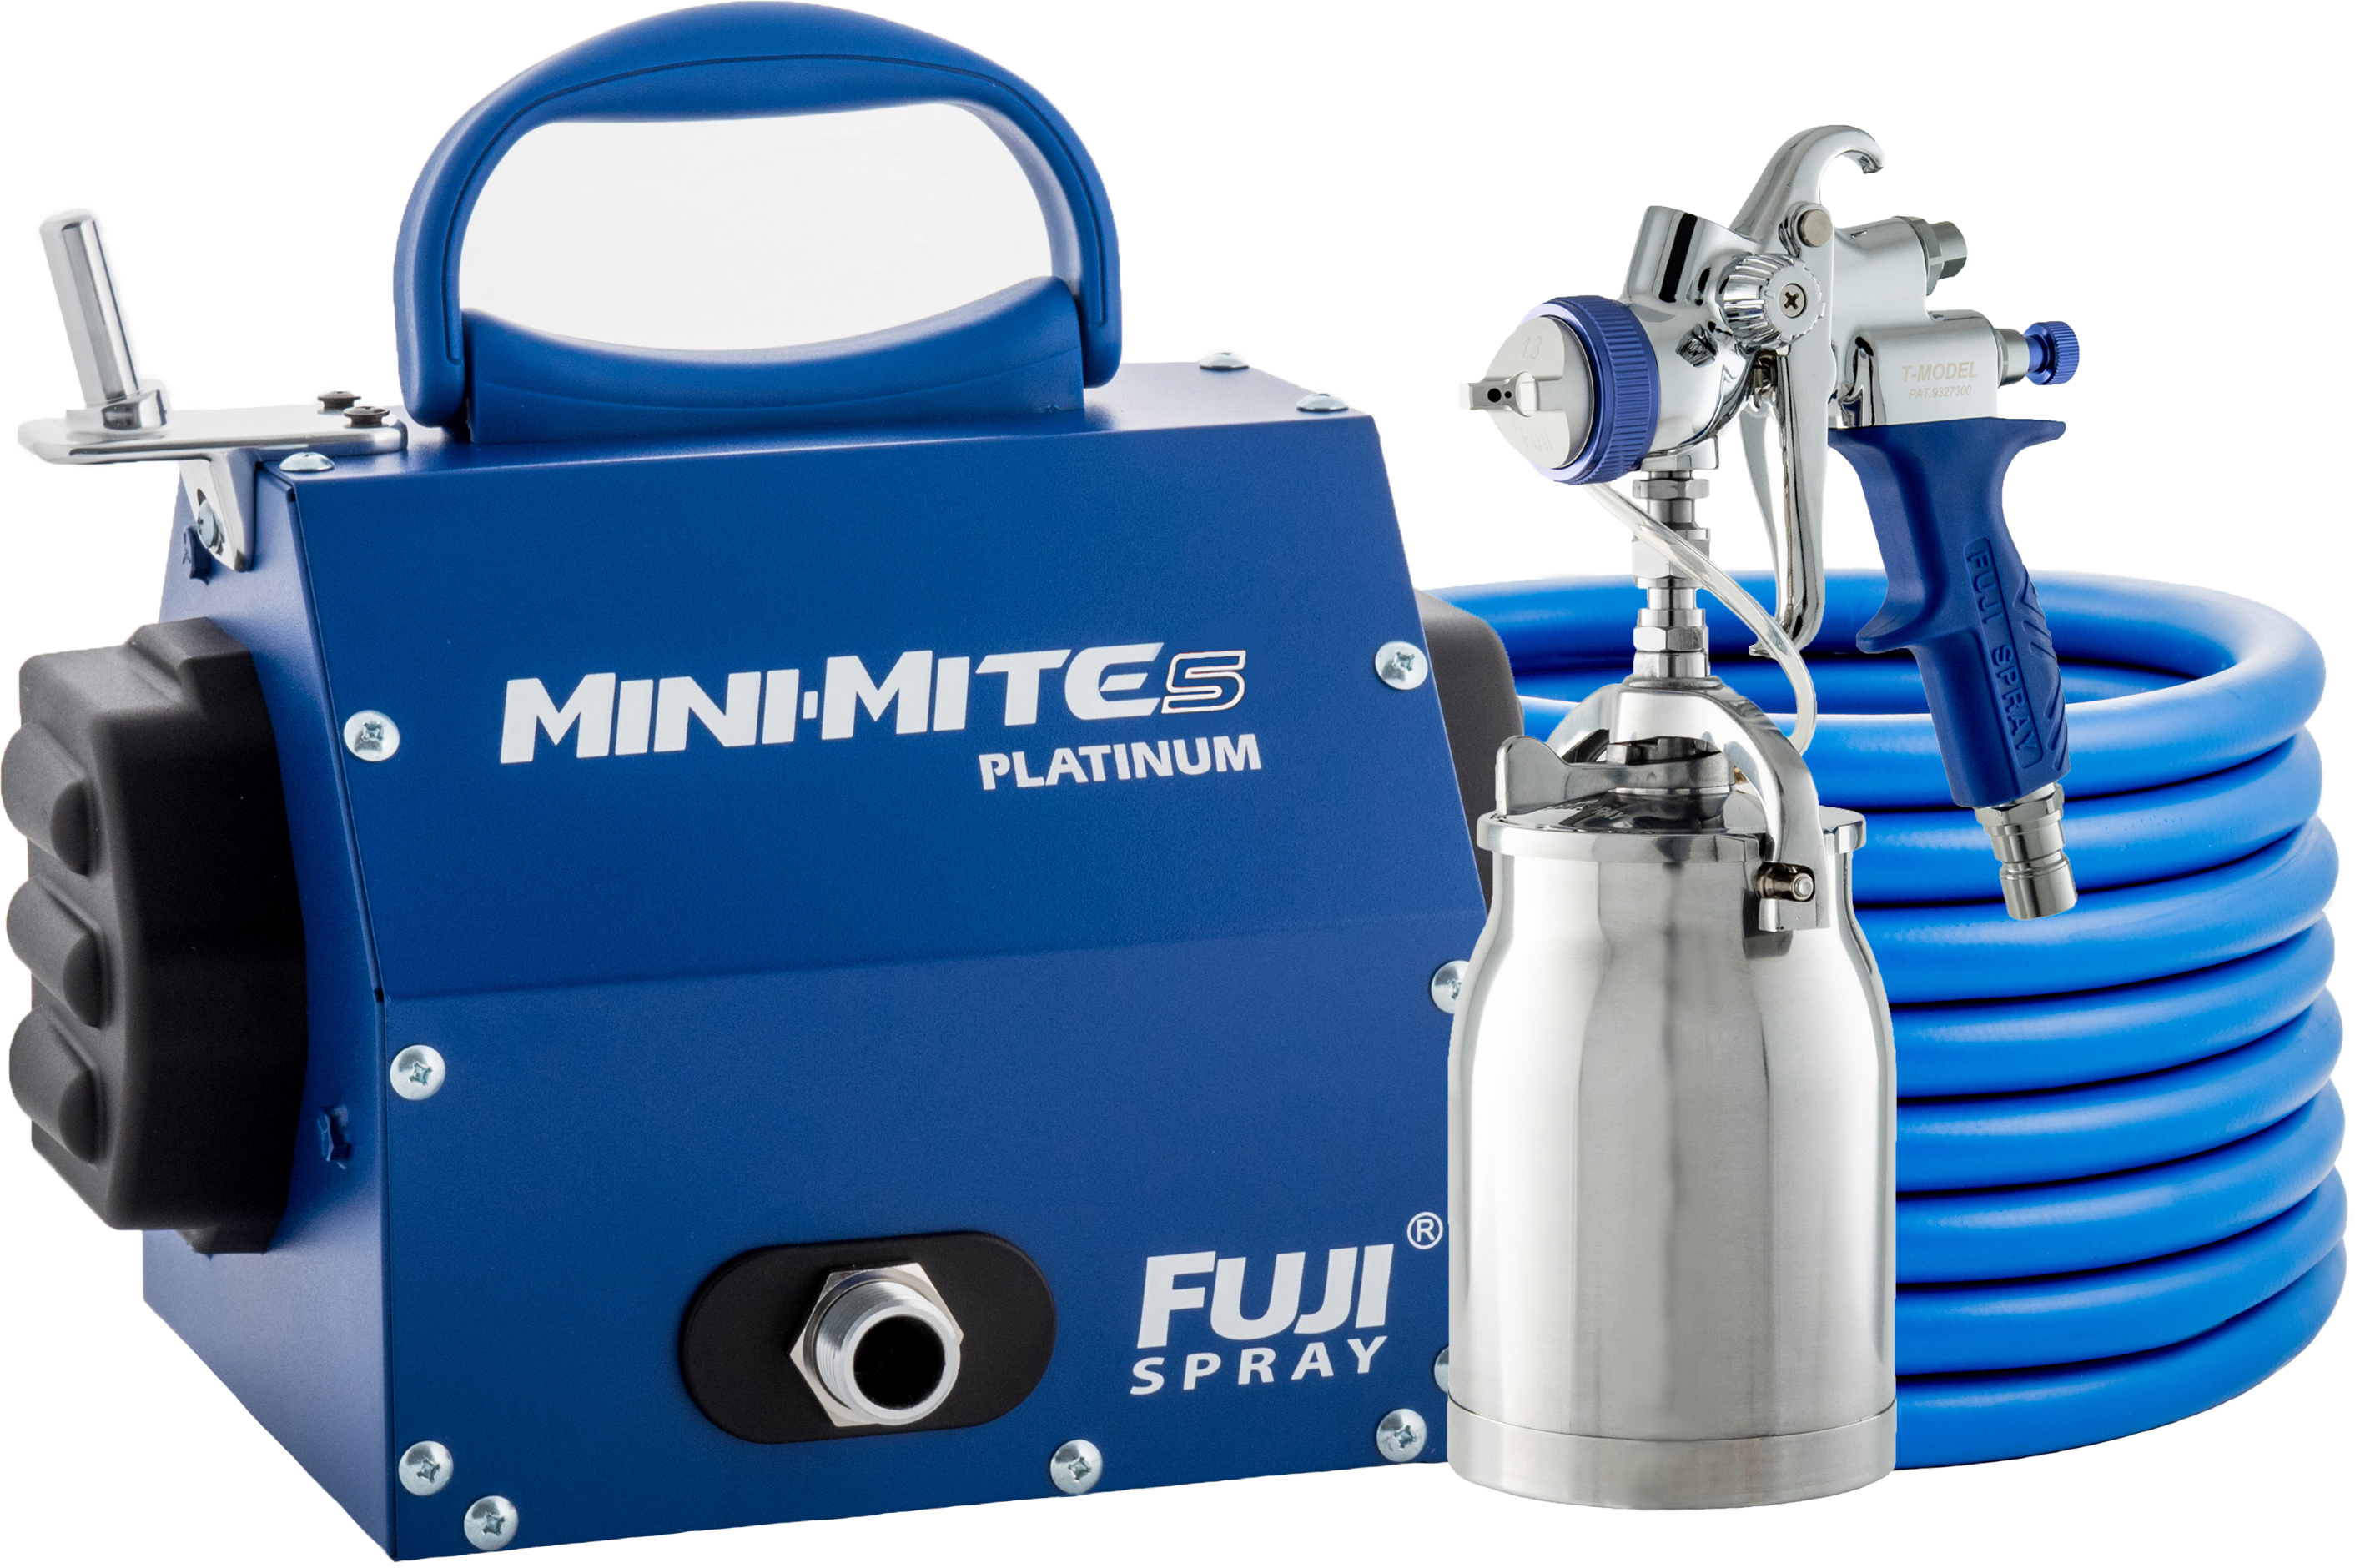 Fuji Mini-Mite 5 T75G Gravity Platinum HVLP Paint Sprayer